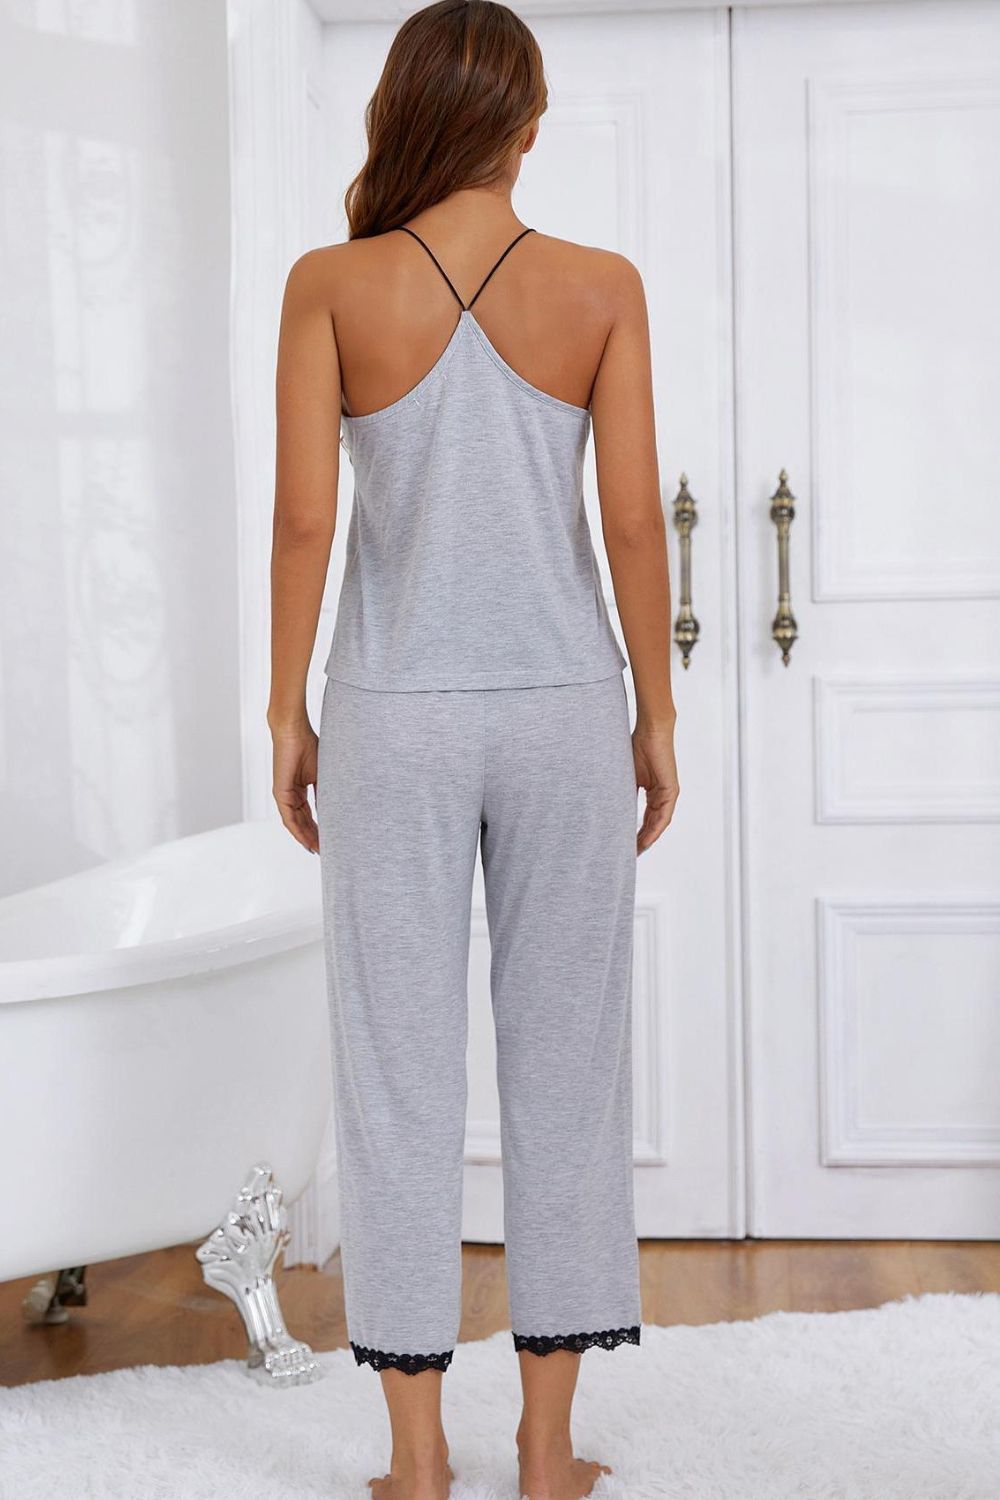 Halter Neck Cami and Lace Trim Pajama Set